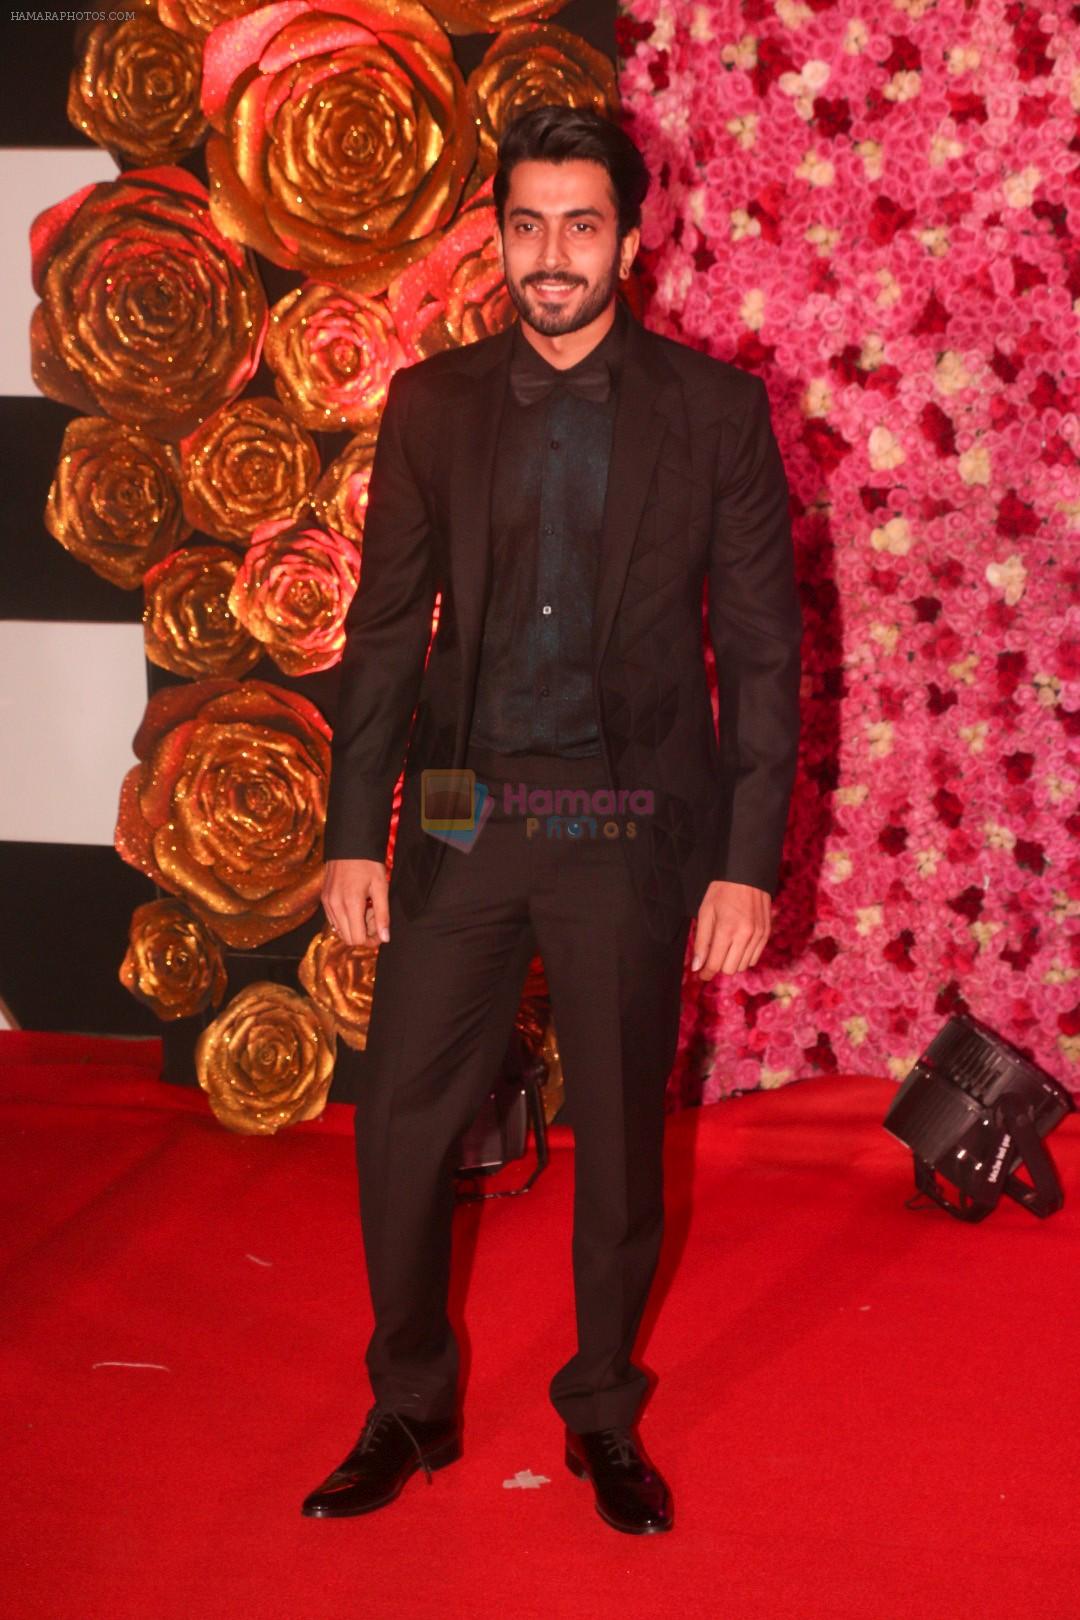 Sunny Singh Nijjar at the Red Carpet of Lux Golden Rose Awards 2018 on 18th Nov 2018